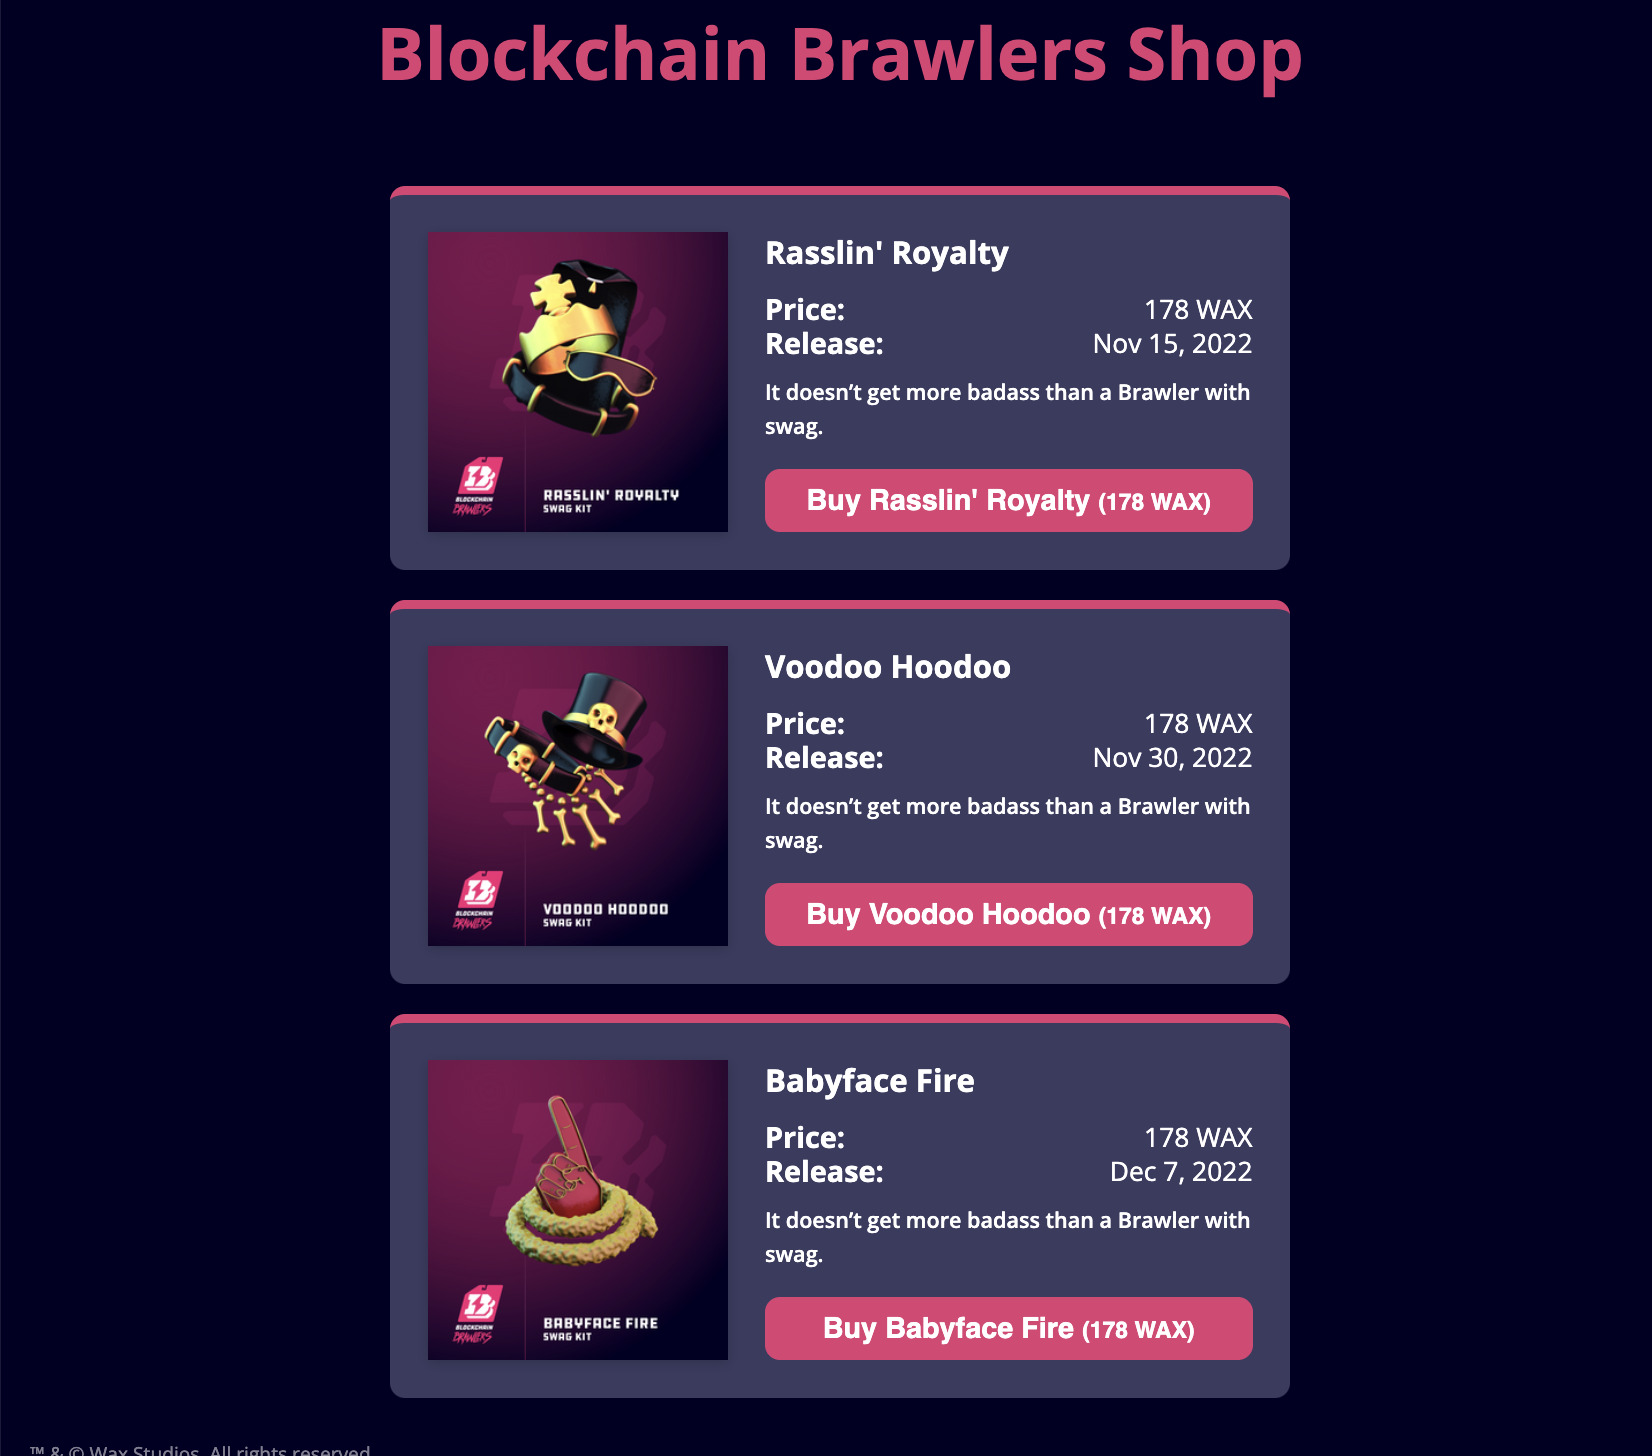 Blockchain Brawlers Shop